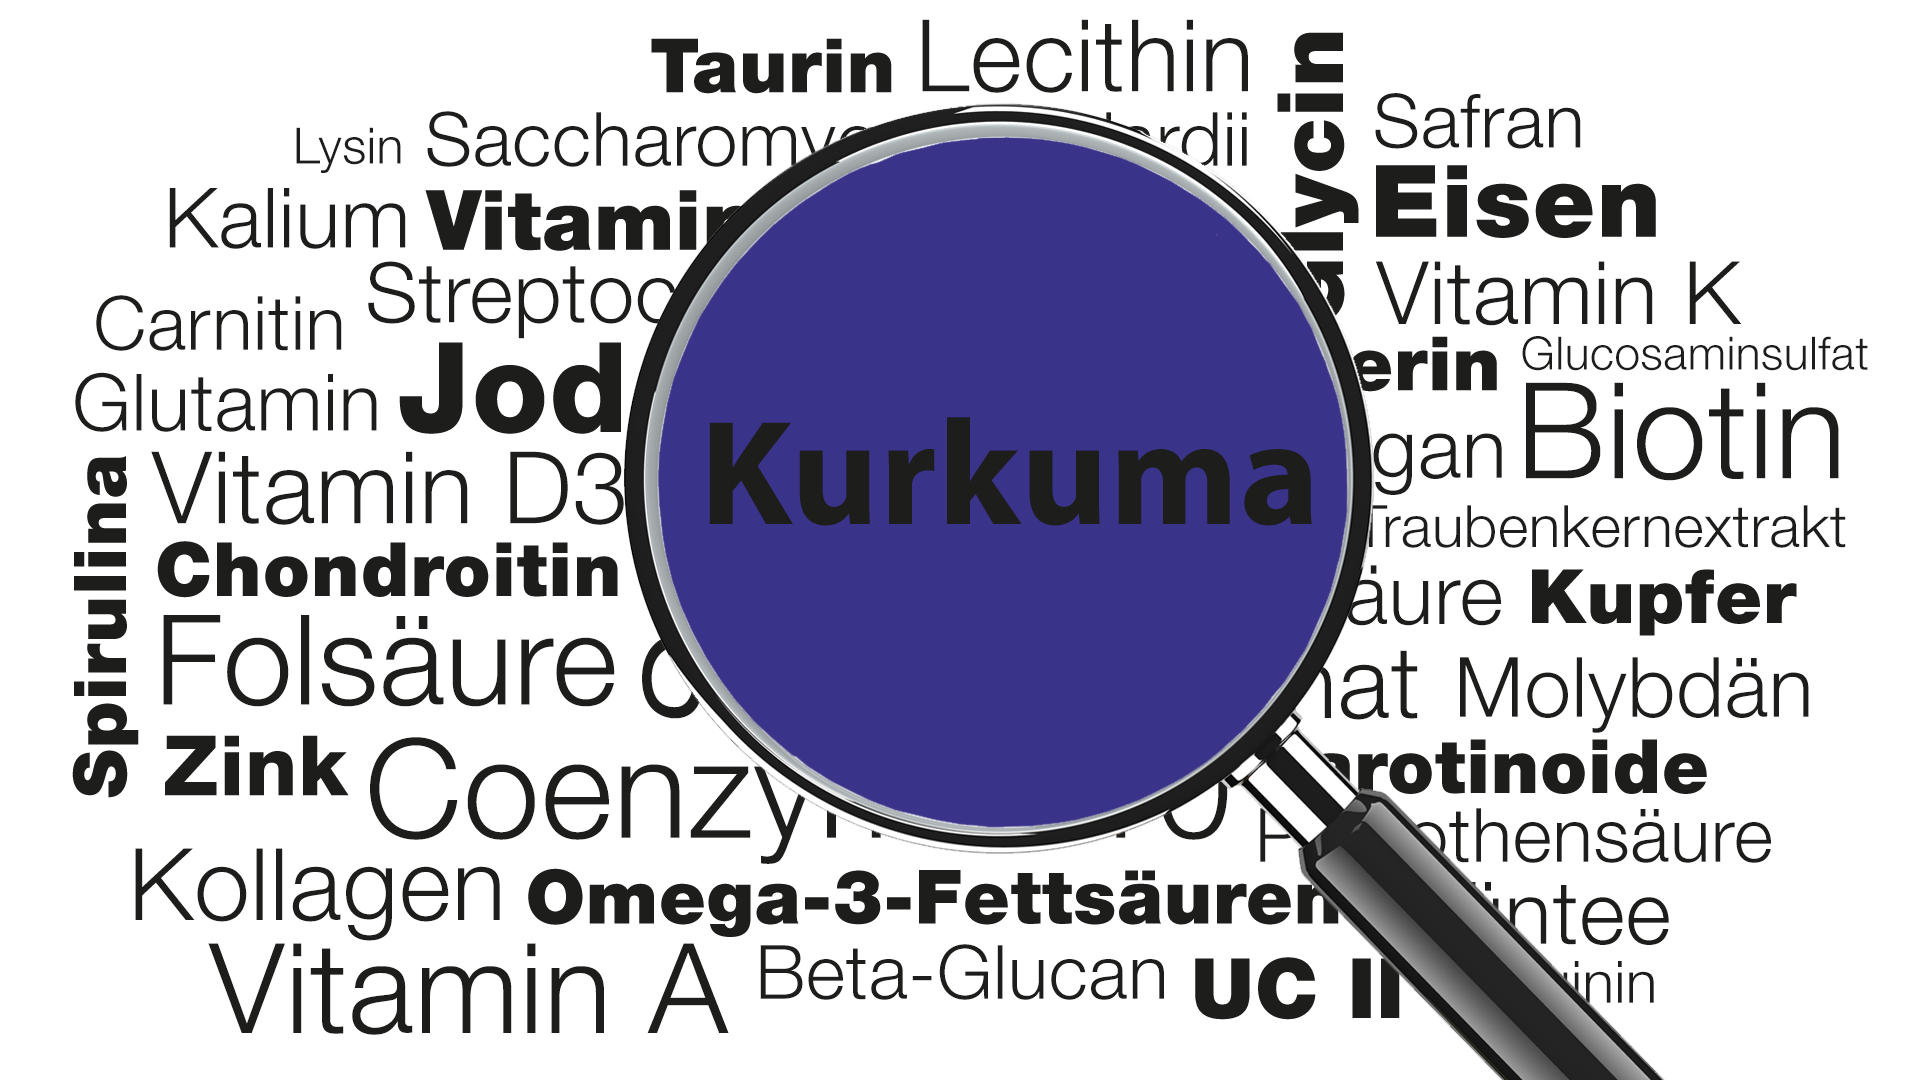 Lupe mit Wort Kurkuma im Fokus